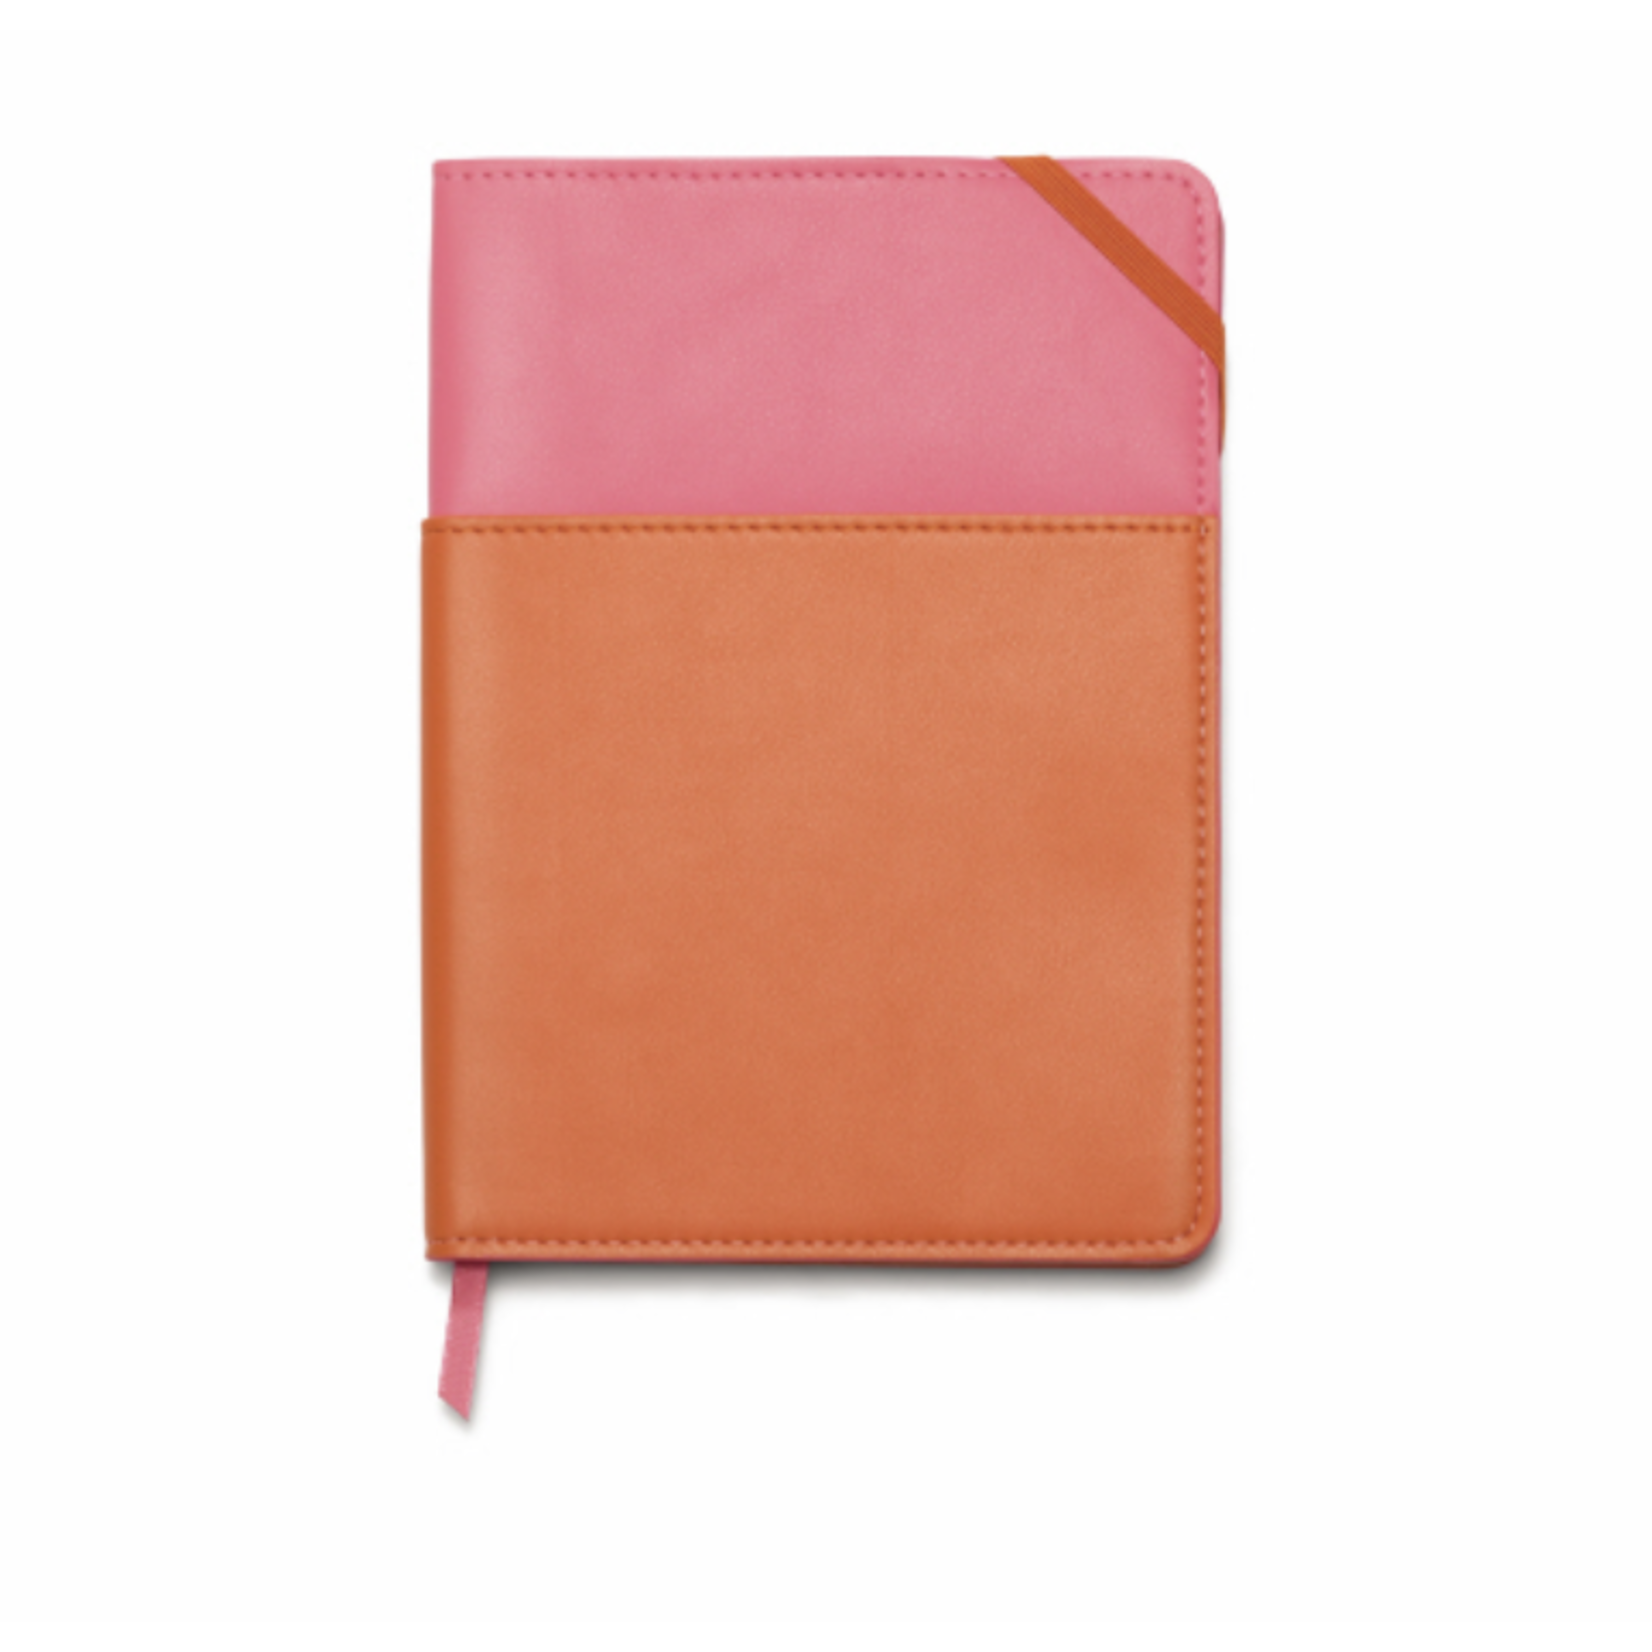 Vegan Leather Pocket Journal 7x9" Pink + Chili